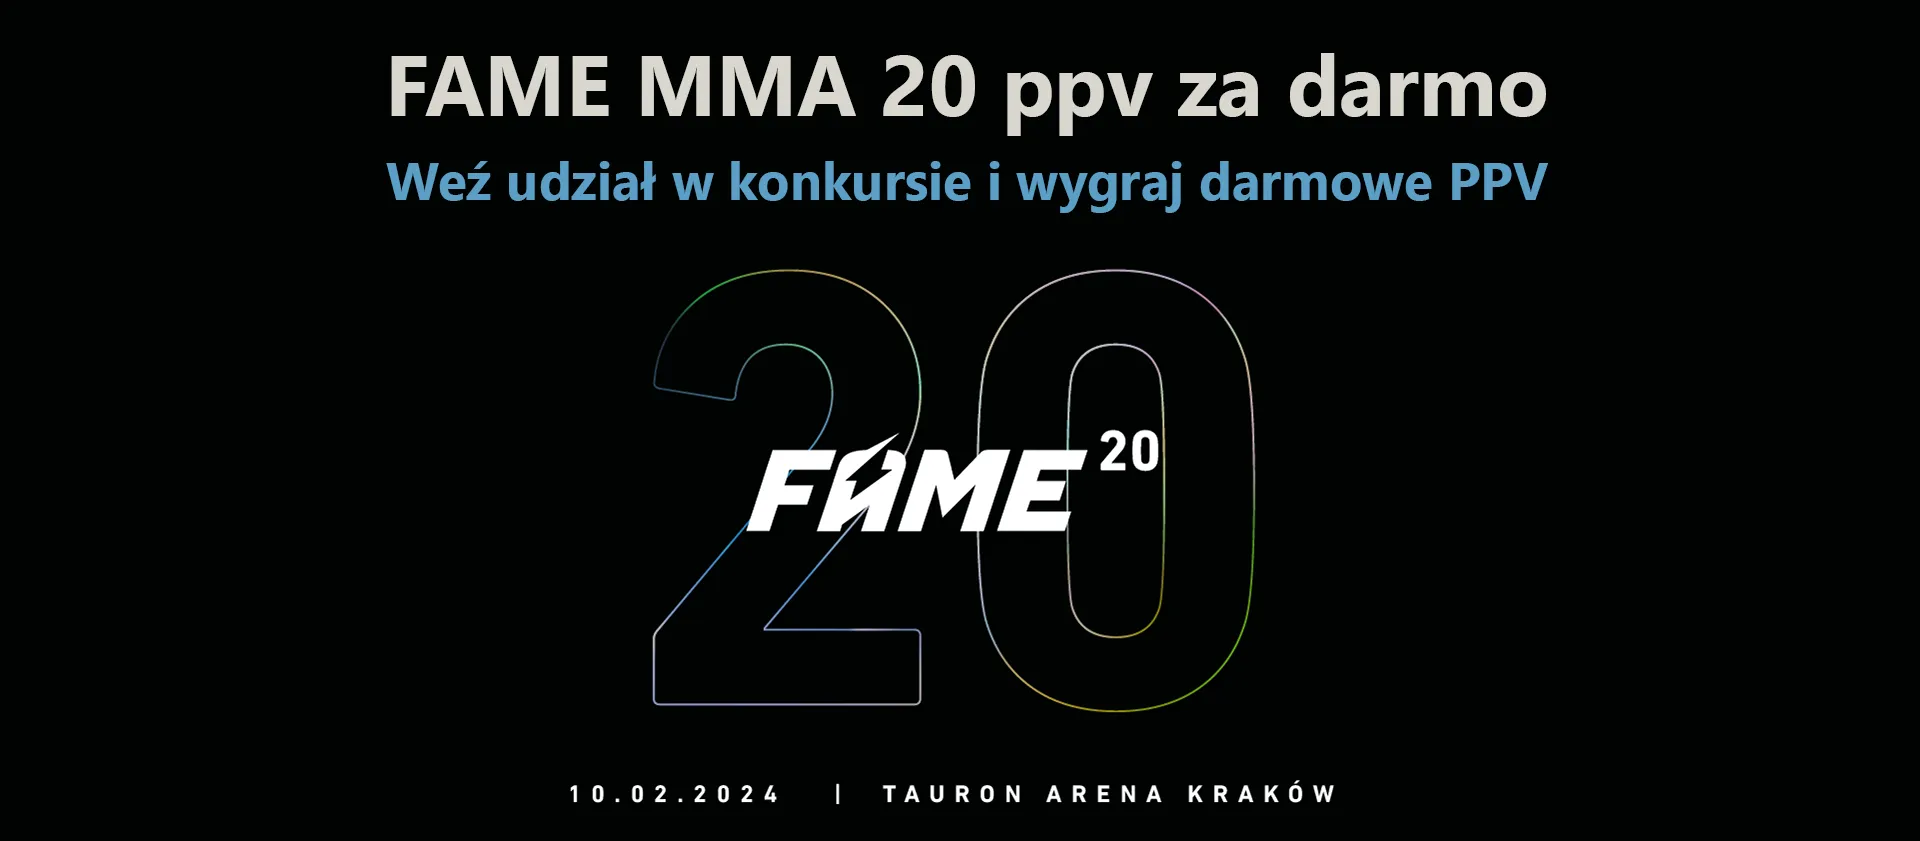 FAME MMA 20 ppv za darmo - konkurs